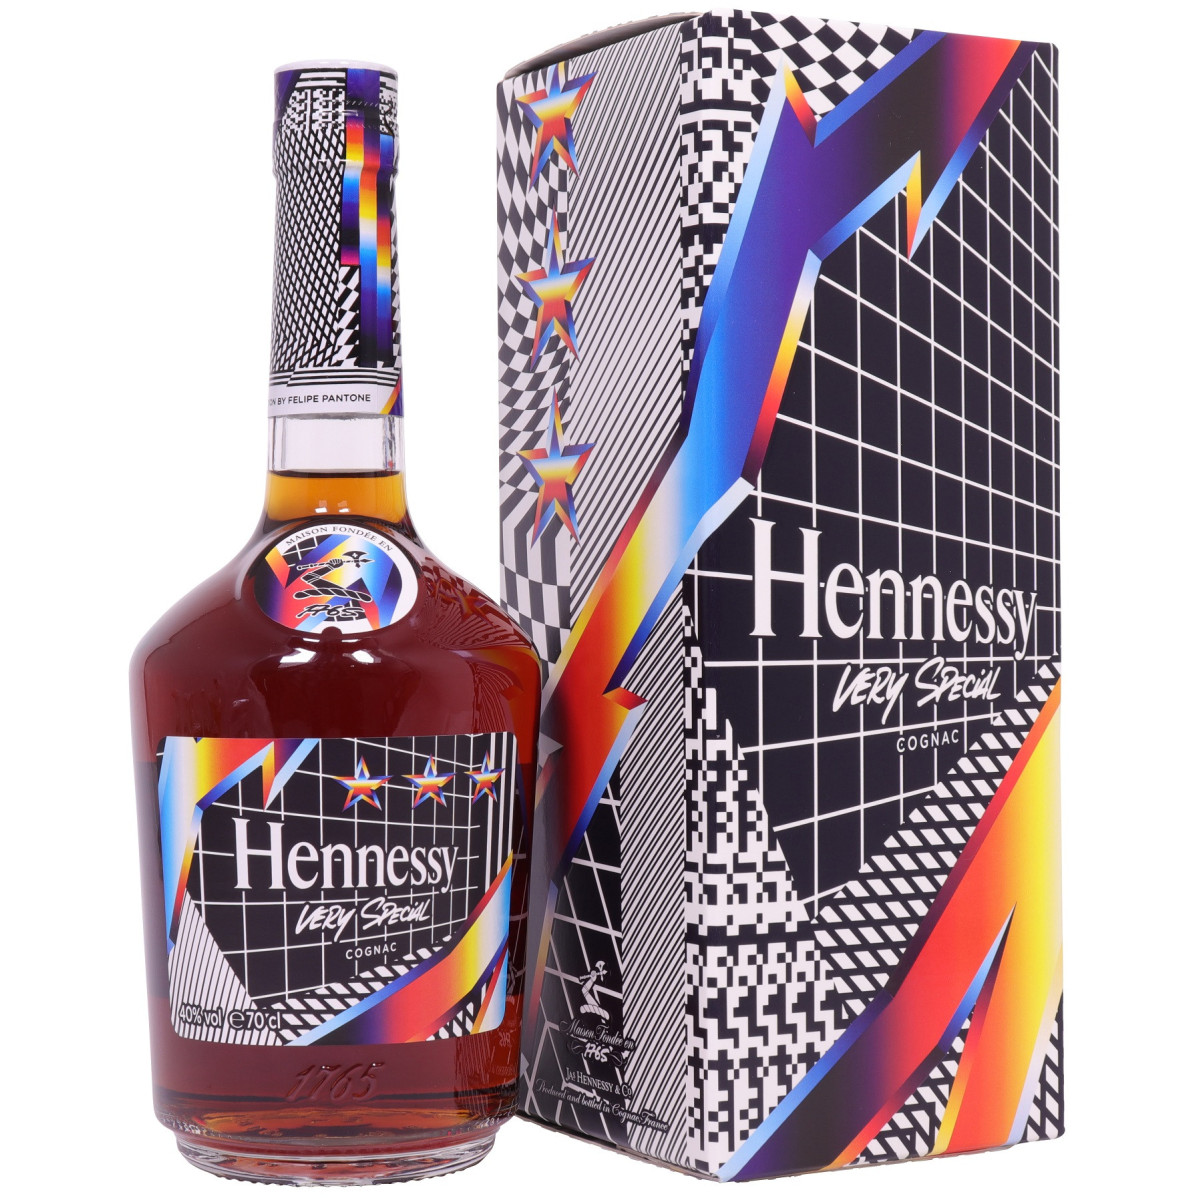 Hennessy Cognac VS Felipe Pantone Limited Edition